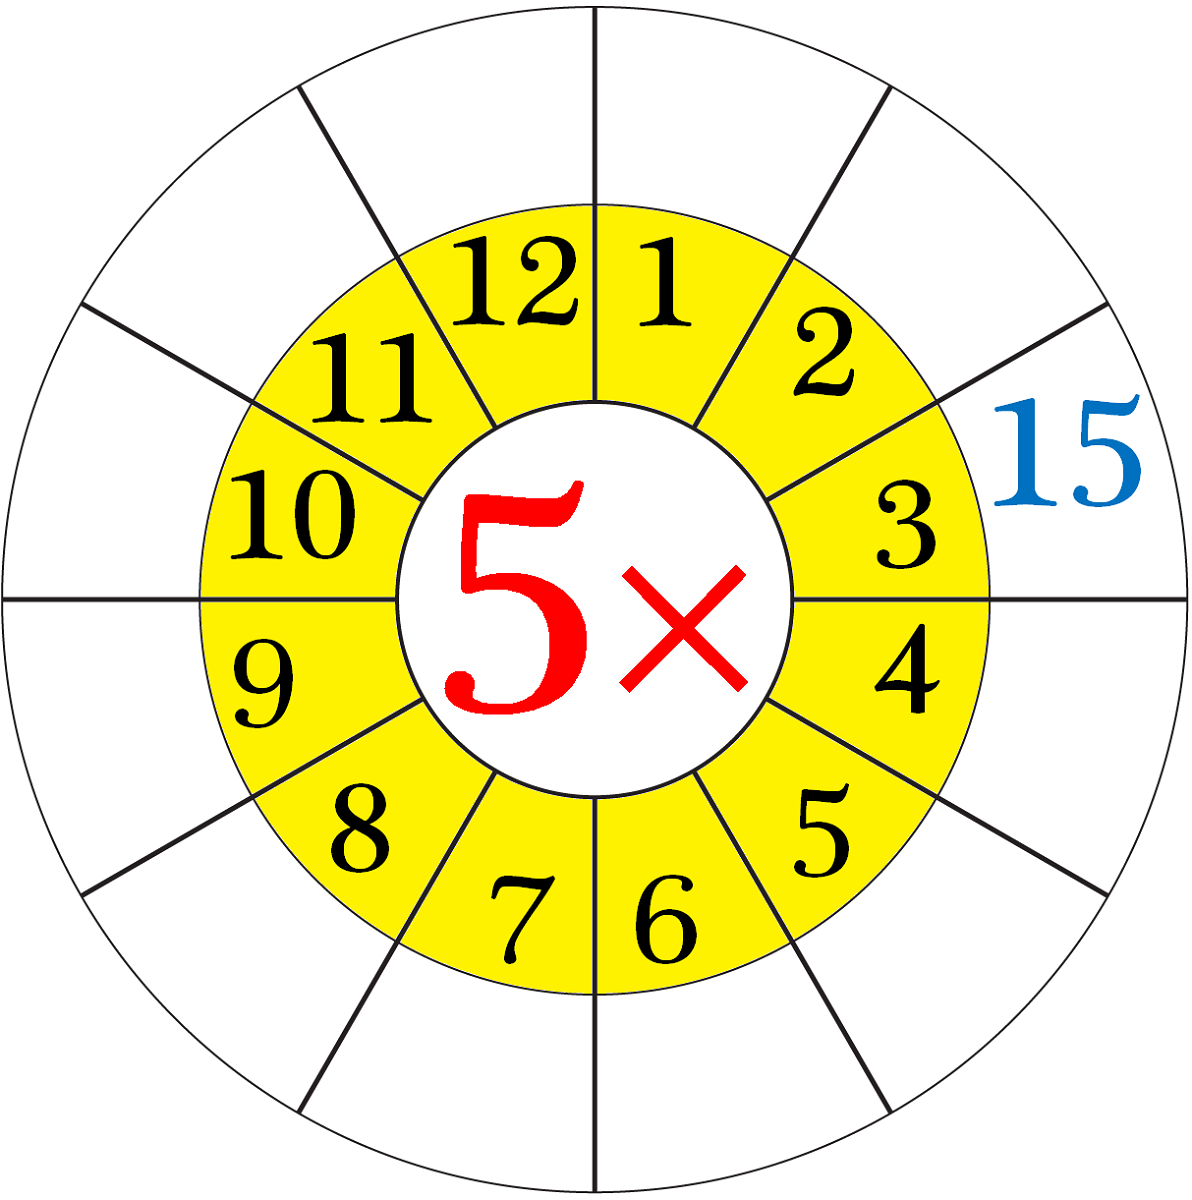 5 times table worksheet circle